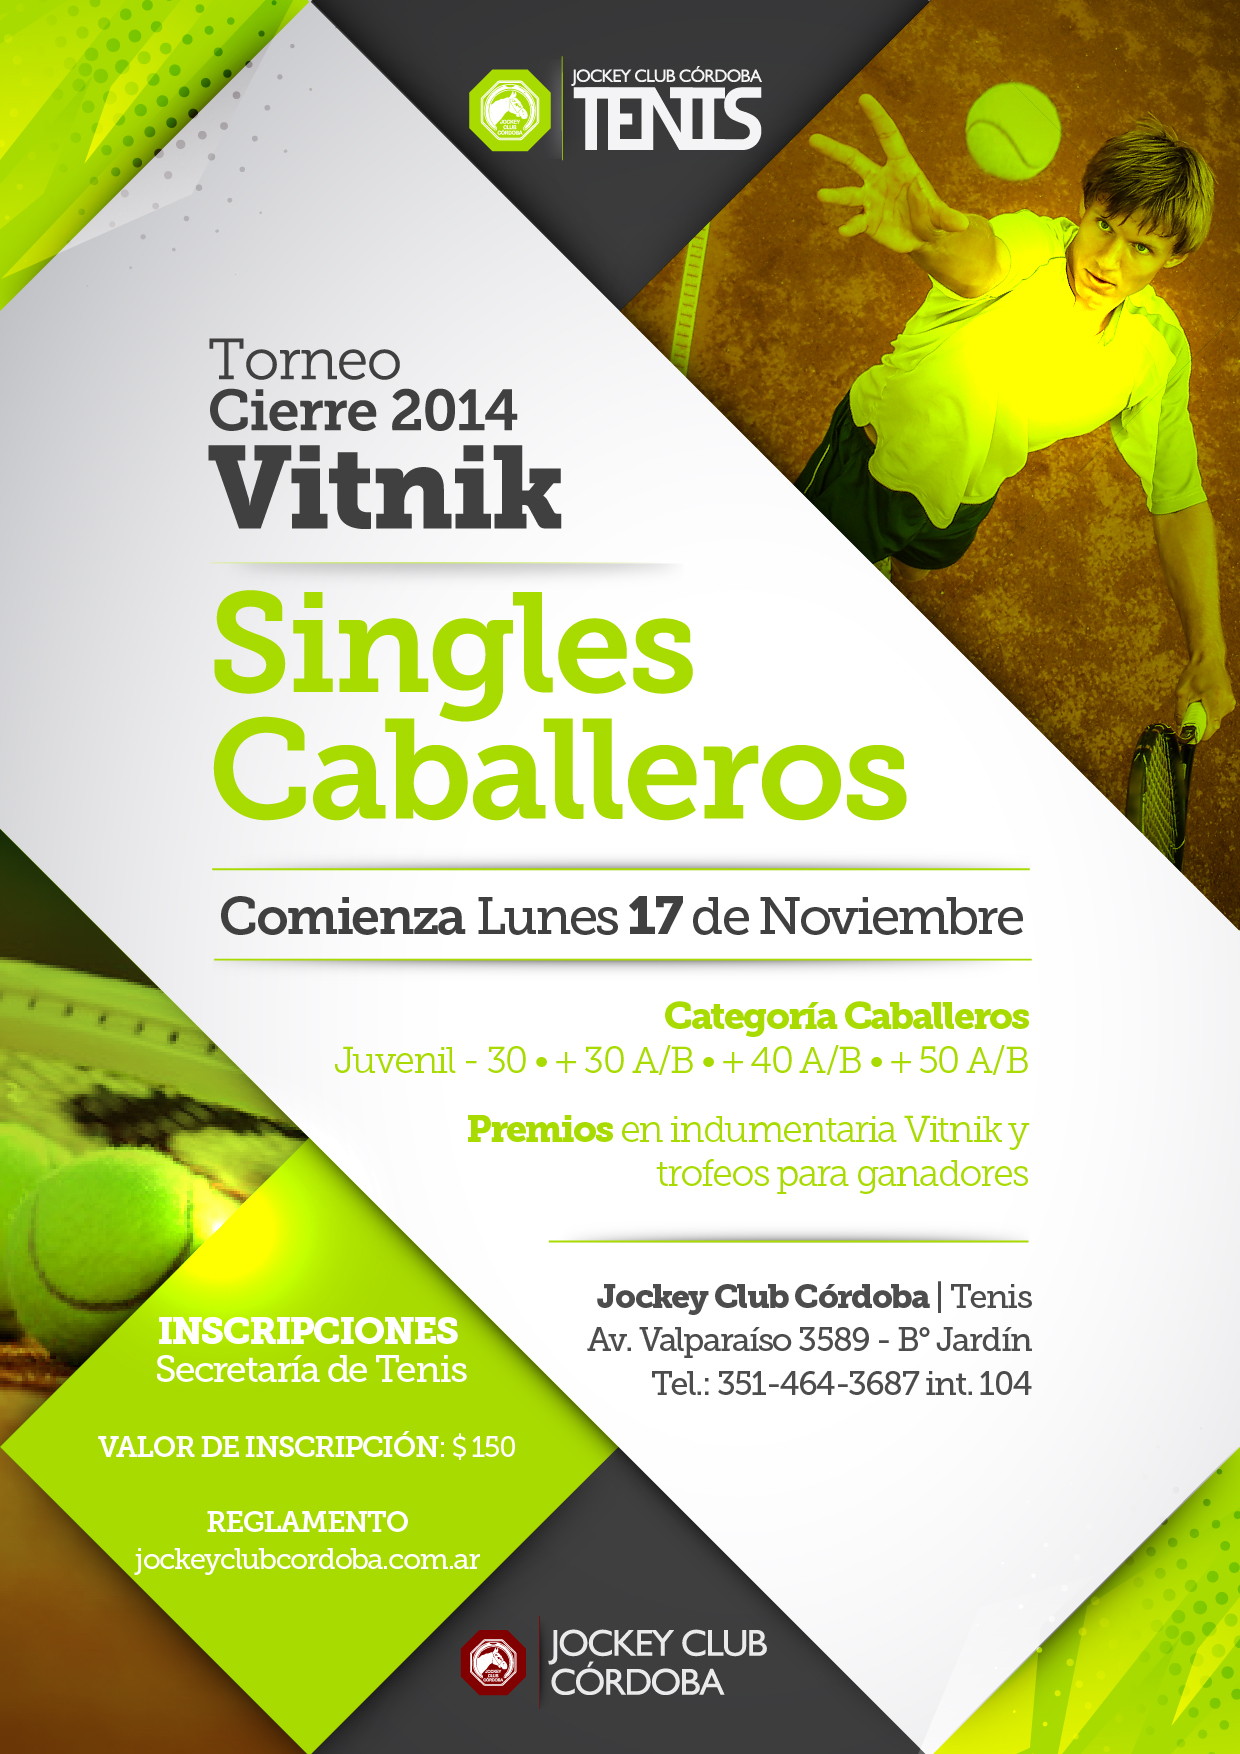 Jockey Club Córdoba Tenis - Torneo Singles Caballeros Vitnik-02